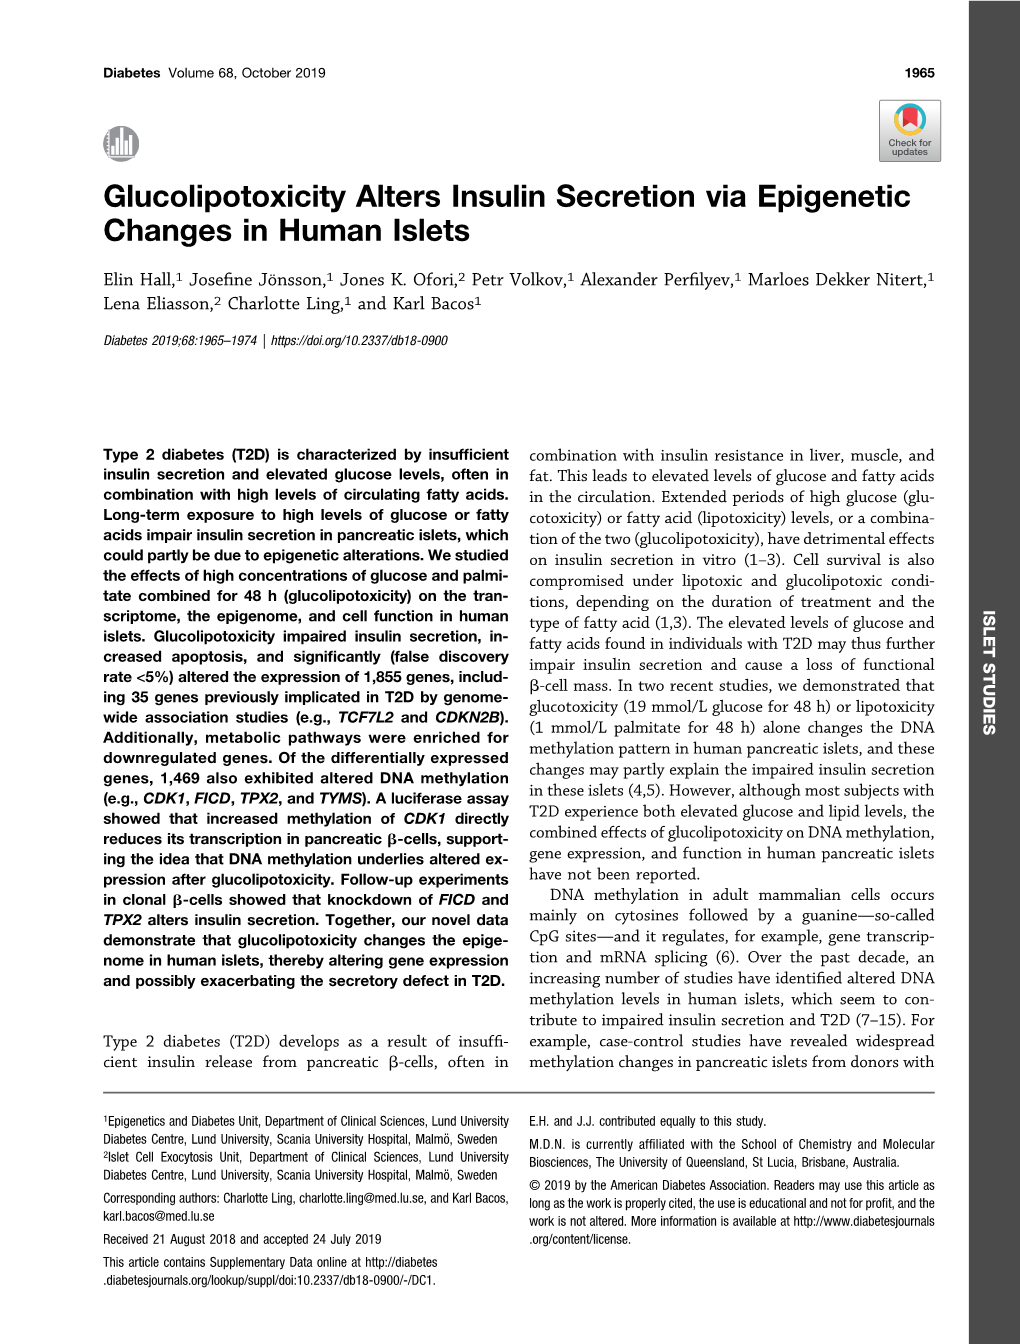 Glucolipotoxicity Alters Insulin Secretion Via Epigenetic Changes in Human Islets